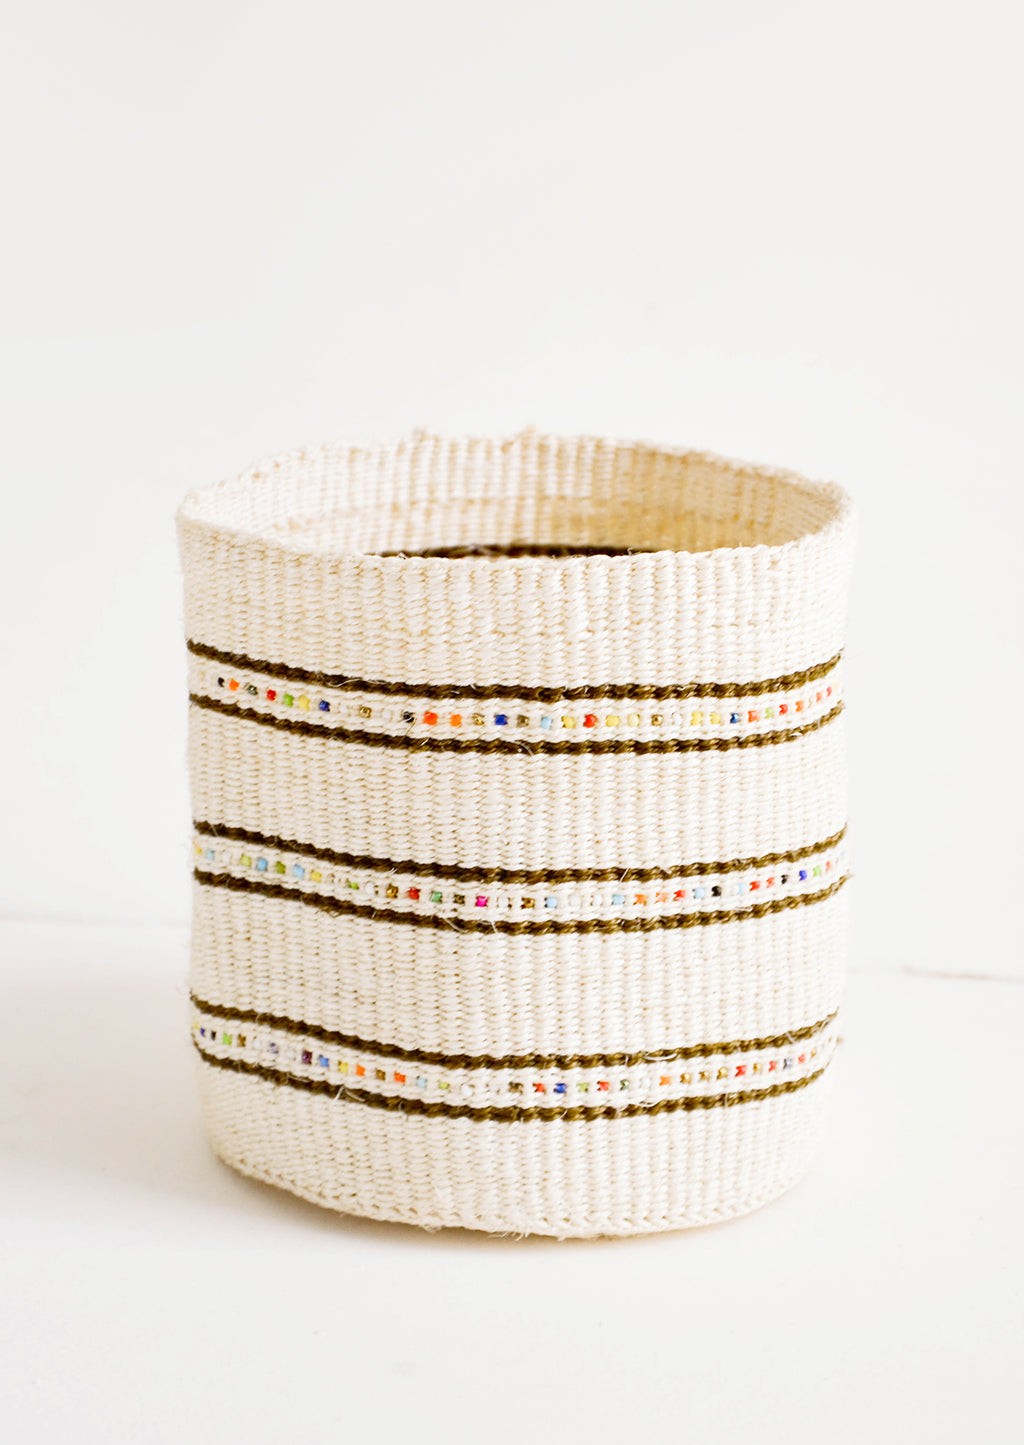 Medium: Natural sisal grass basket with stripes and rainbow beading